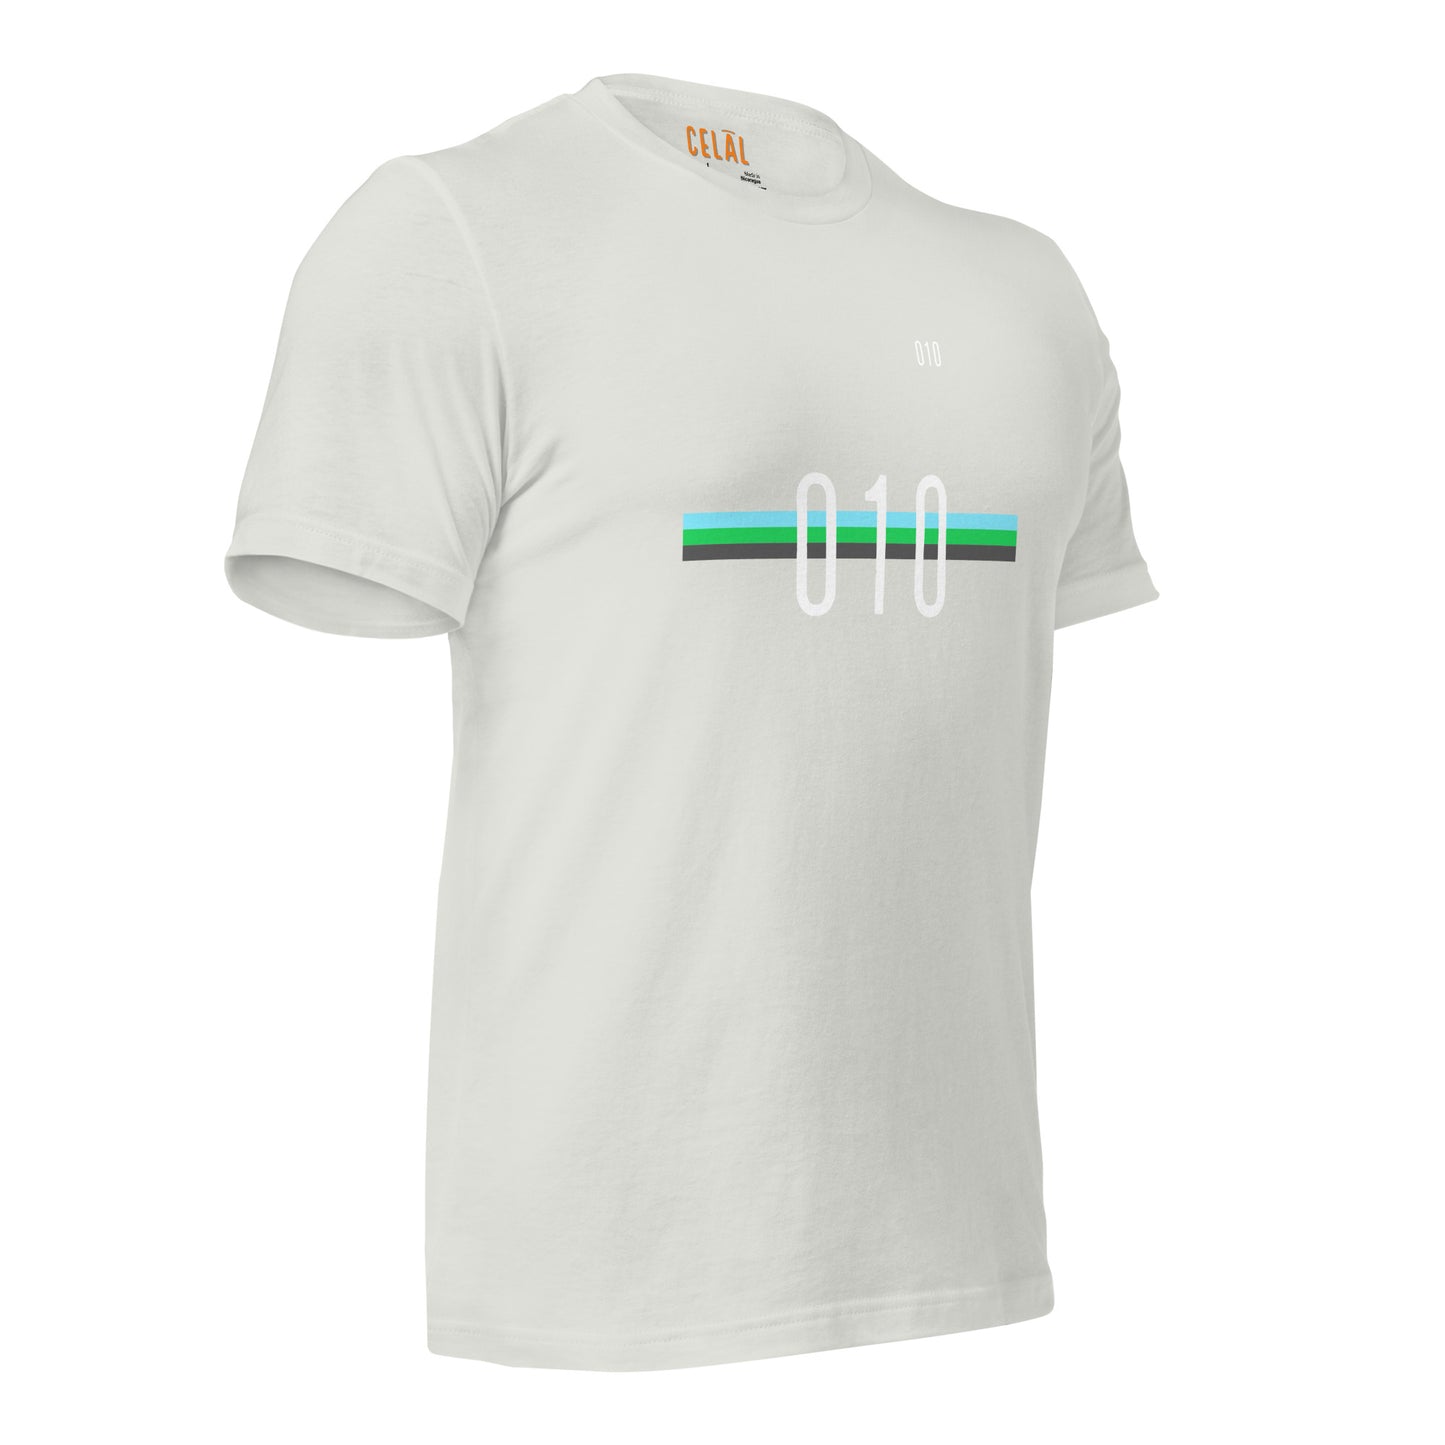 010 Unisex t-shirt